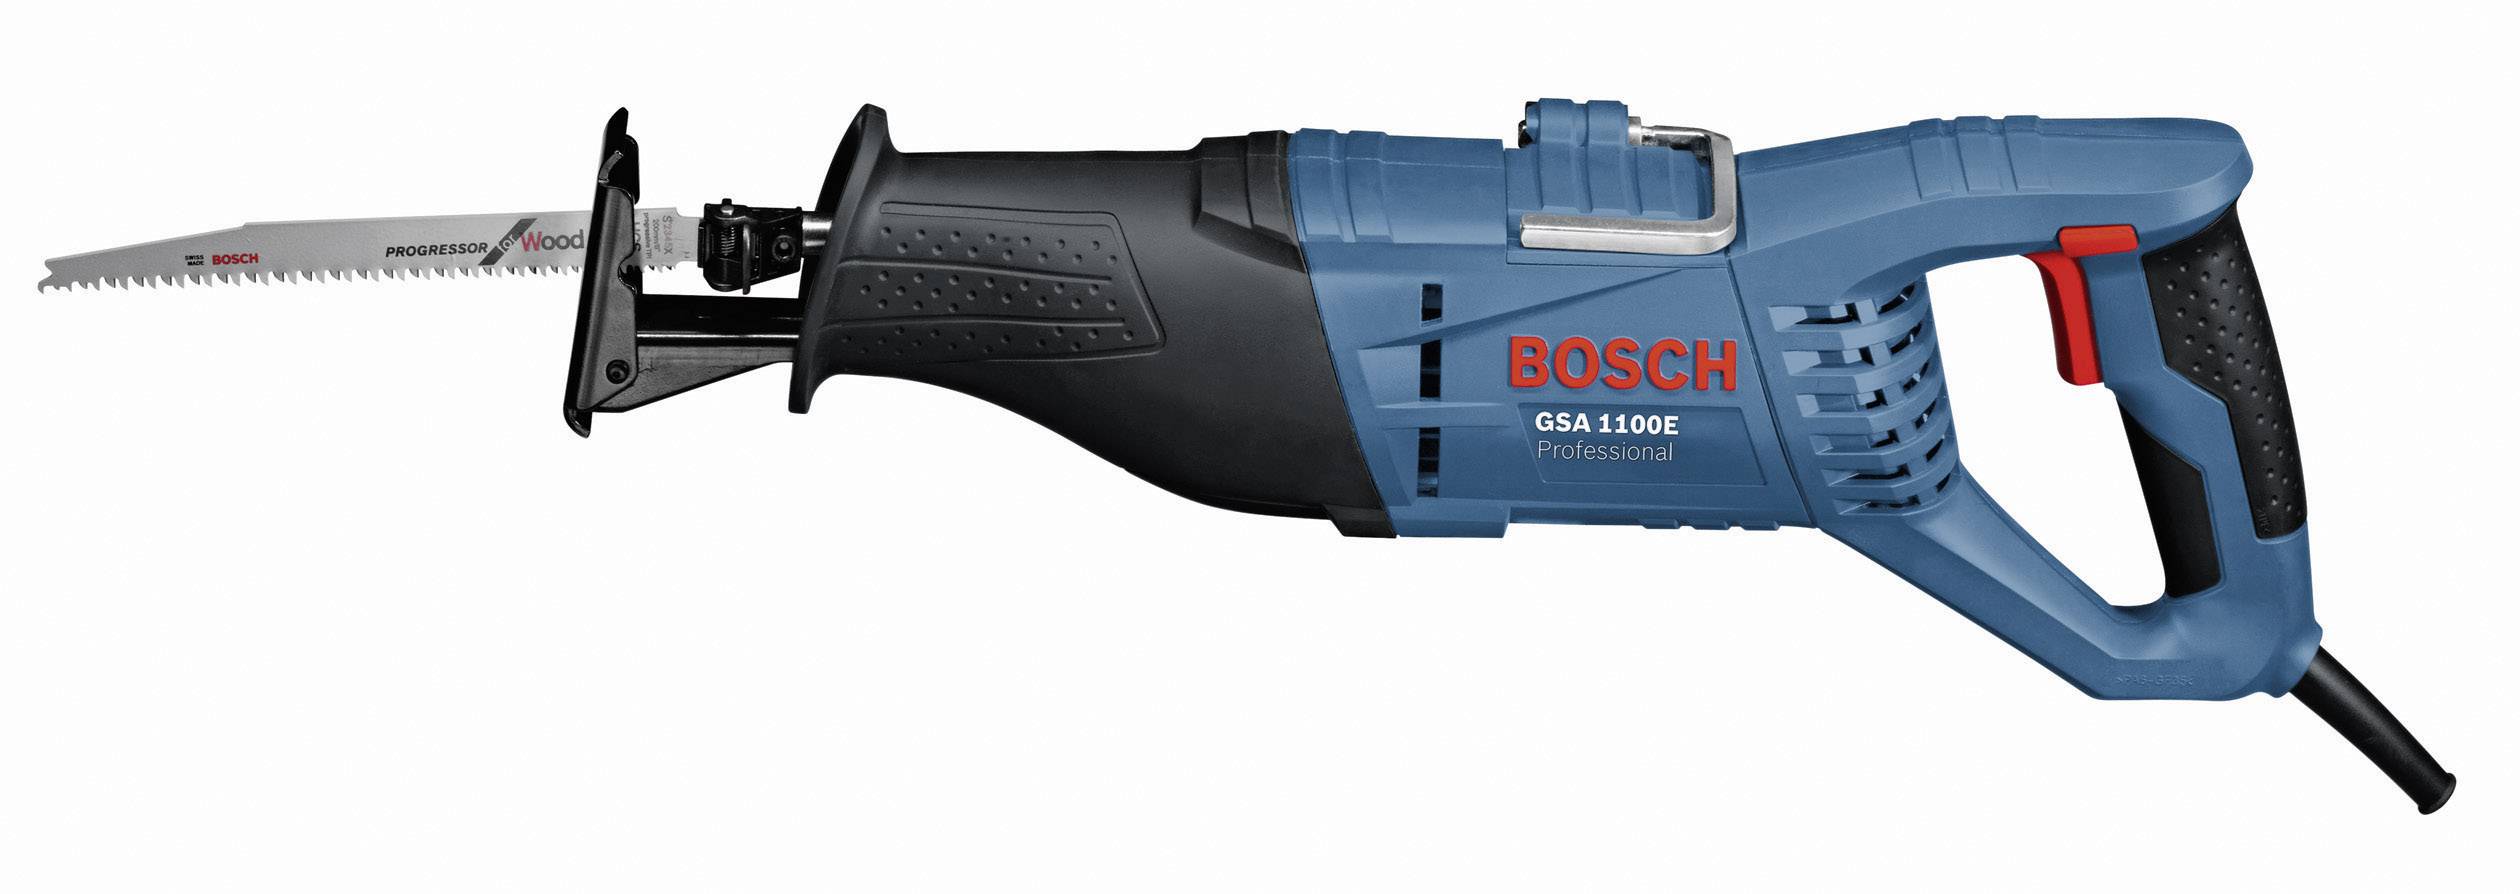 ongerustheid bladerdeeg Vertrouwen op Bosch Professional GSA 1100 E Recipro saw 060164C800 GSA 1100 E incl. case  1100 W | Conrad.com